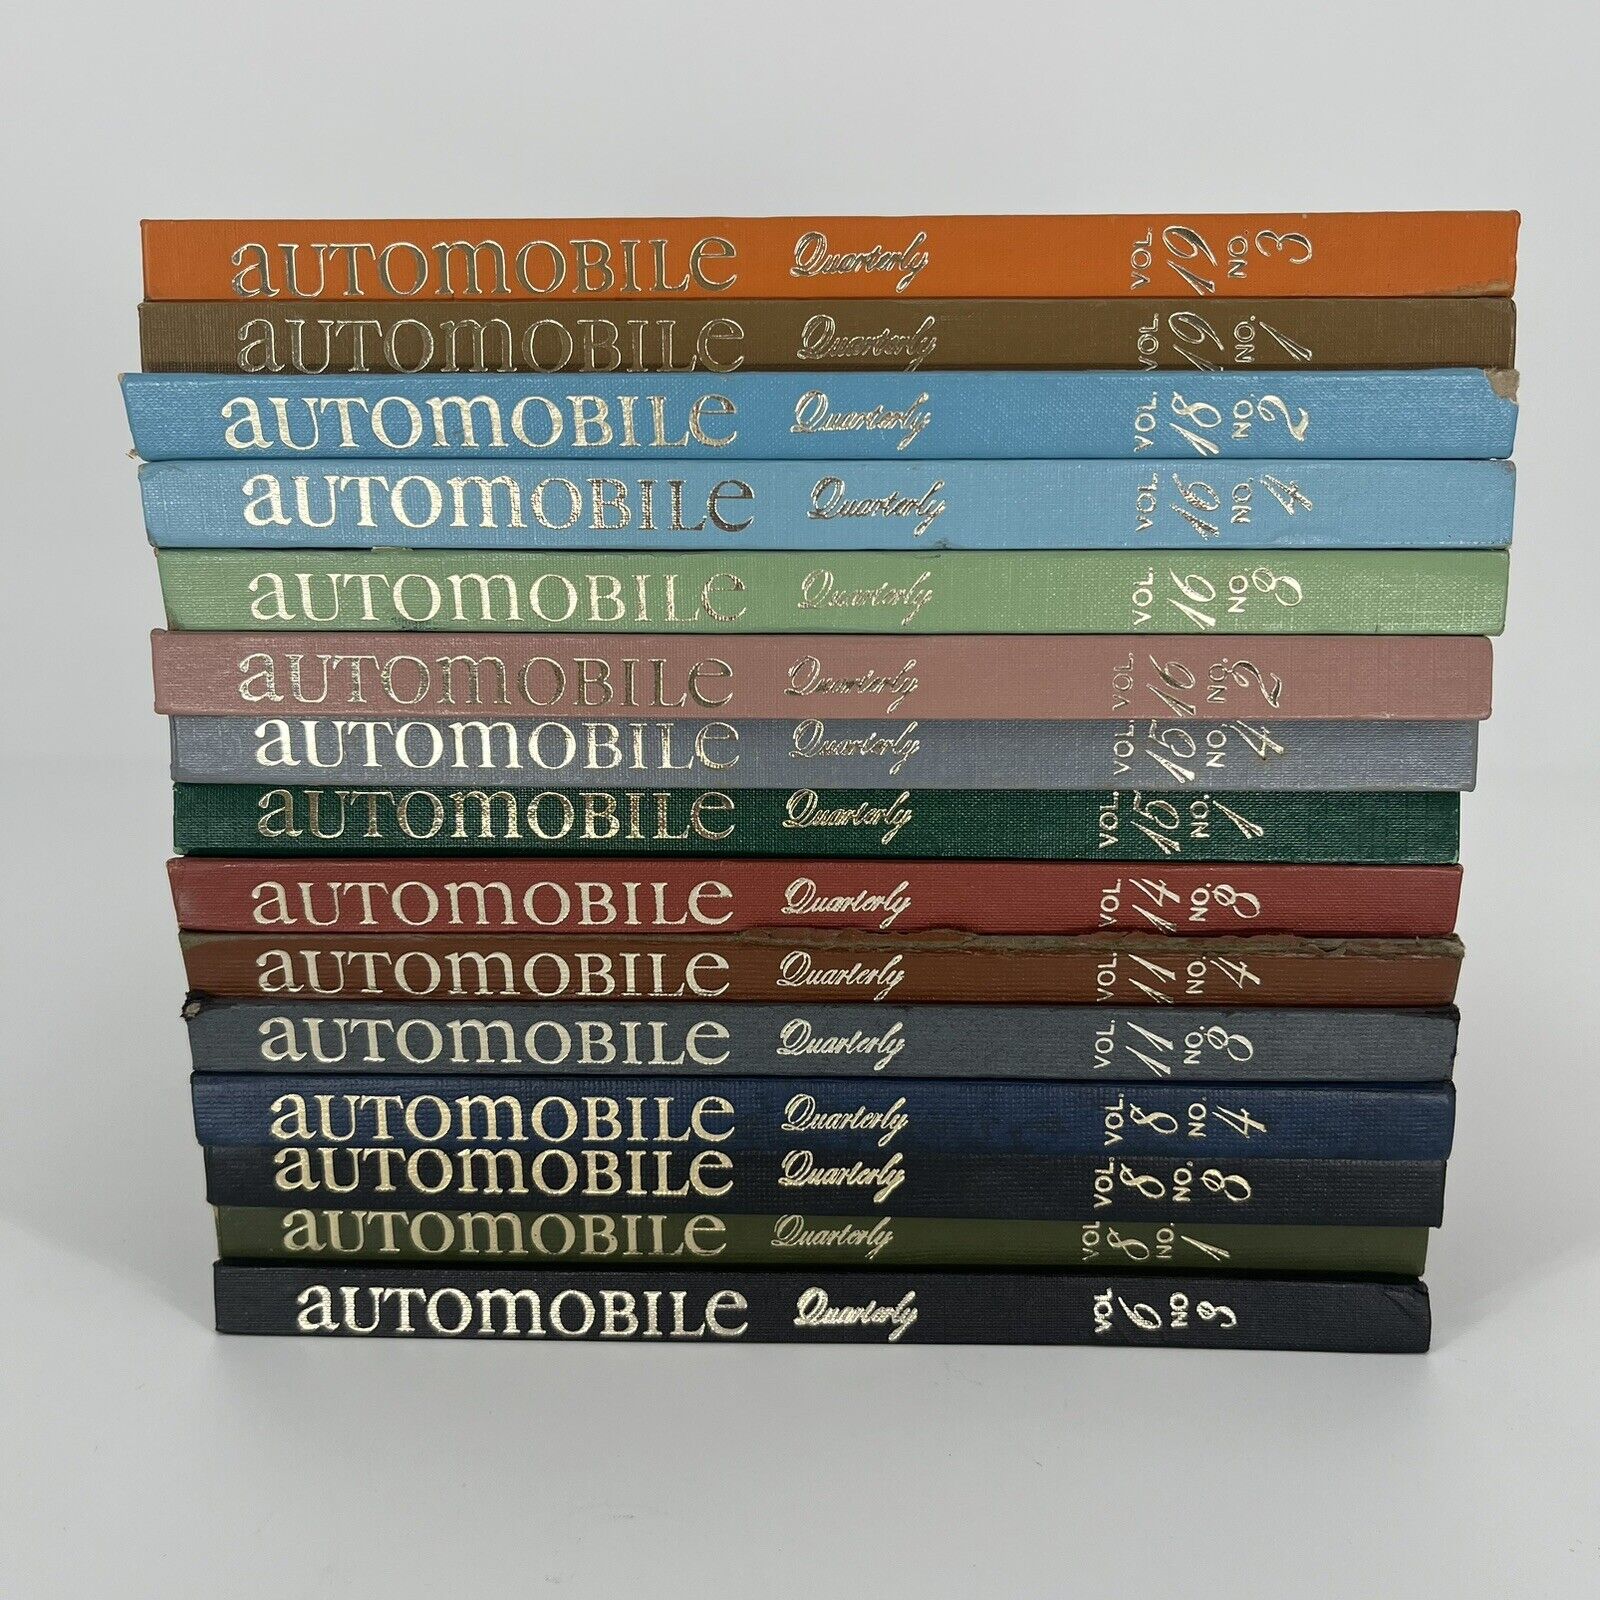 Automobile Quarterly Hardcover Lot of 15